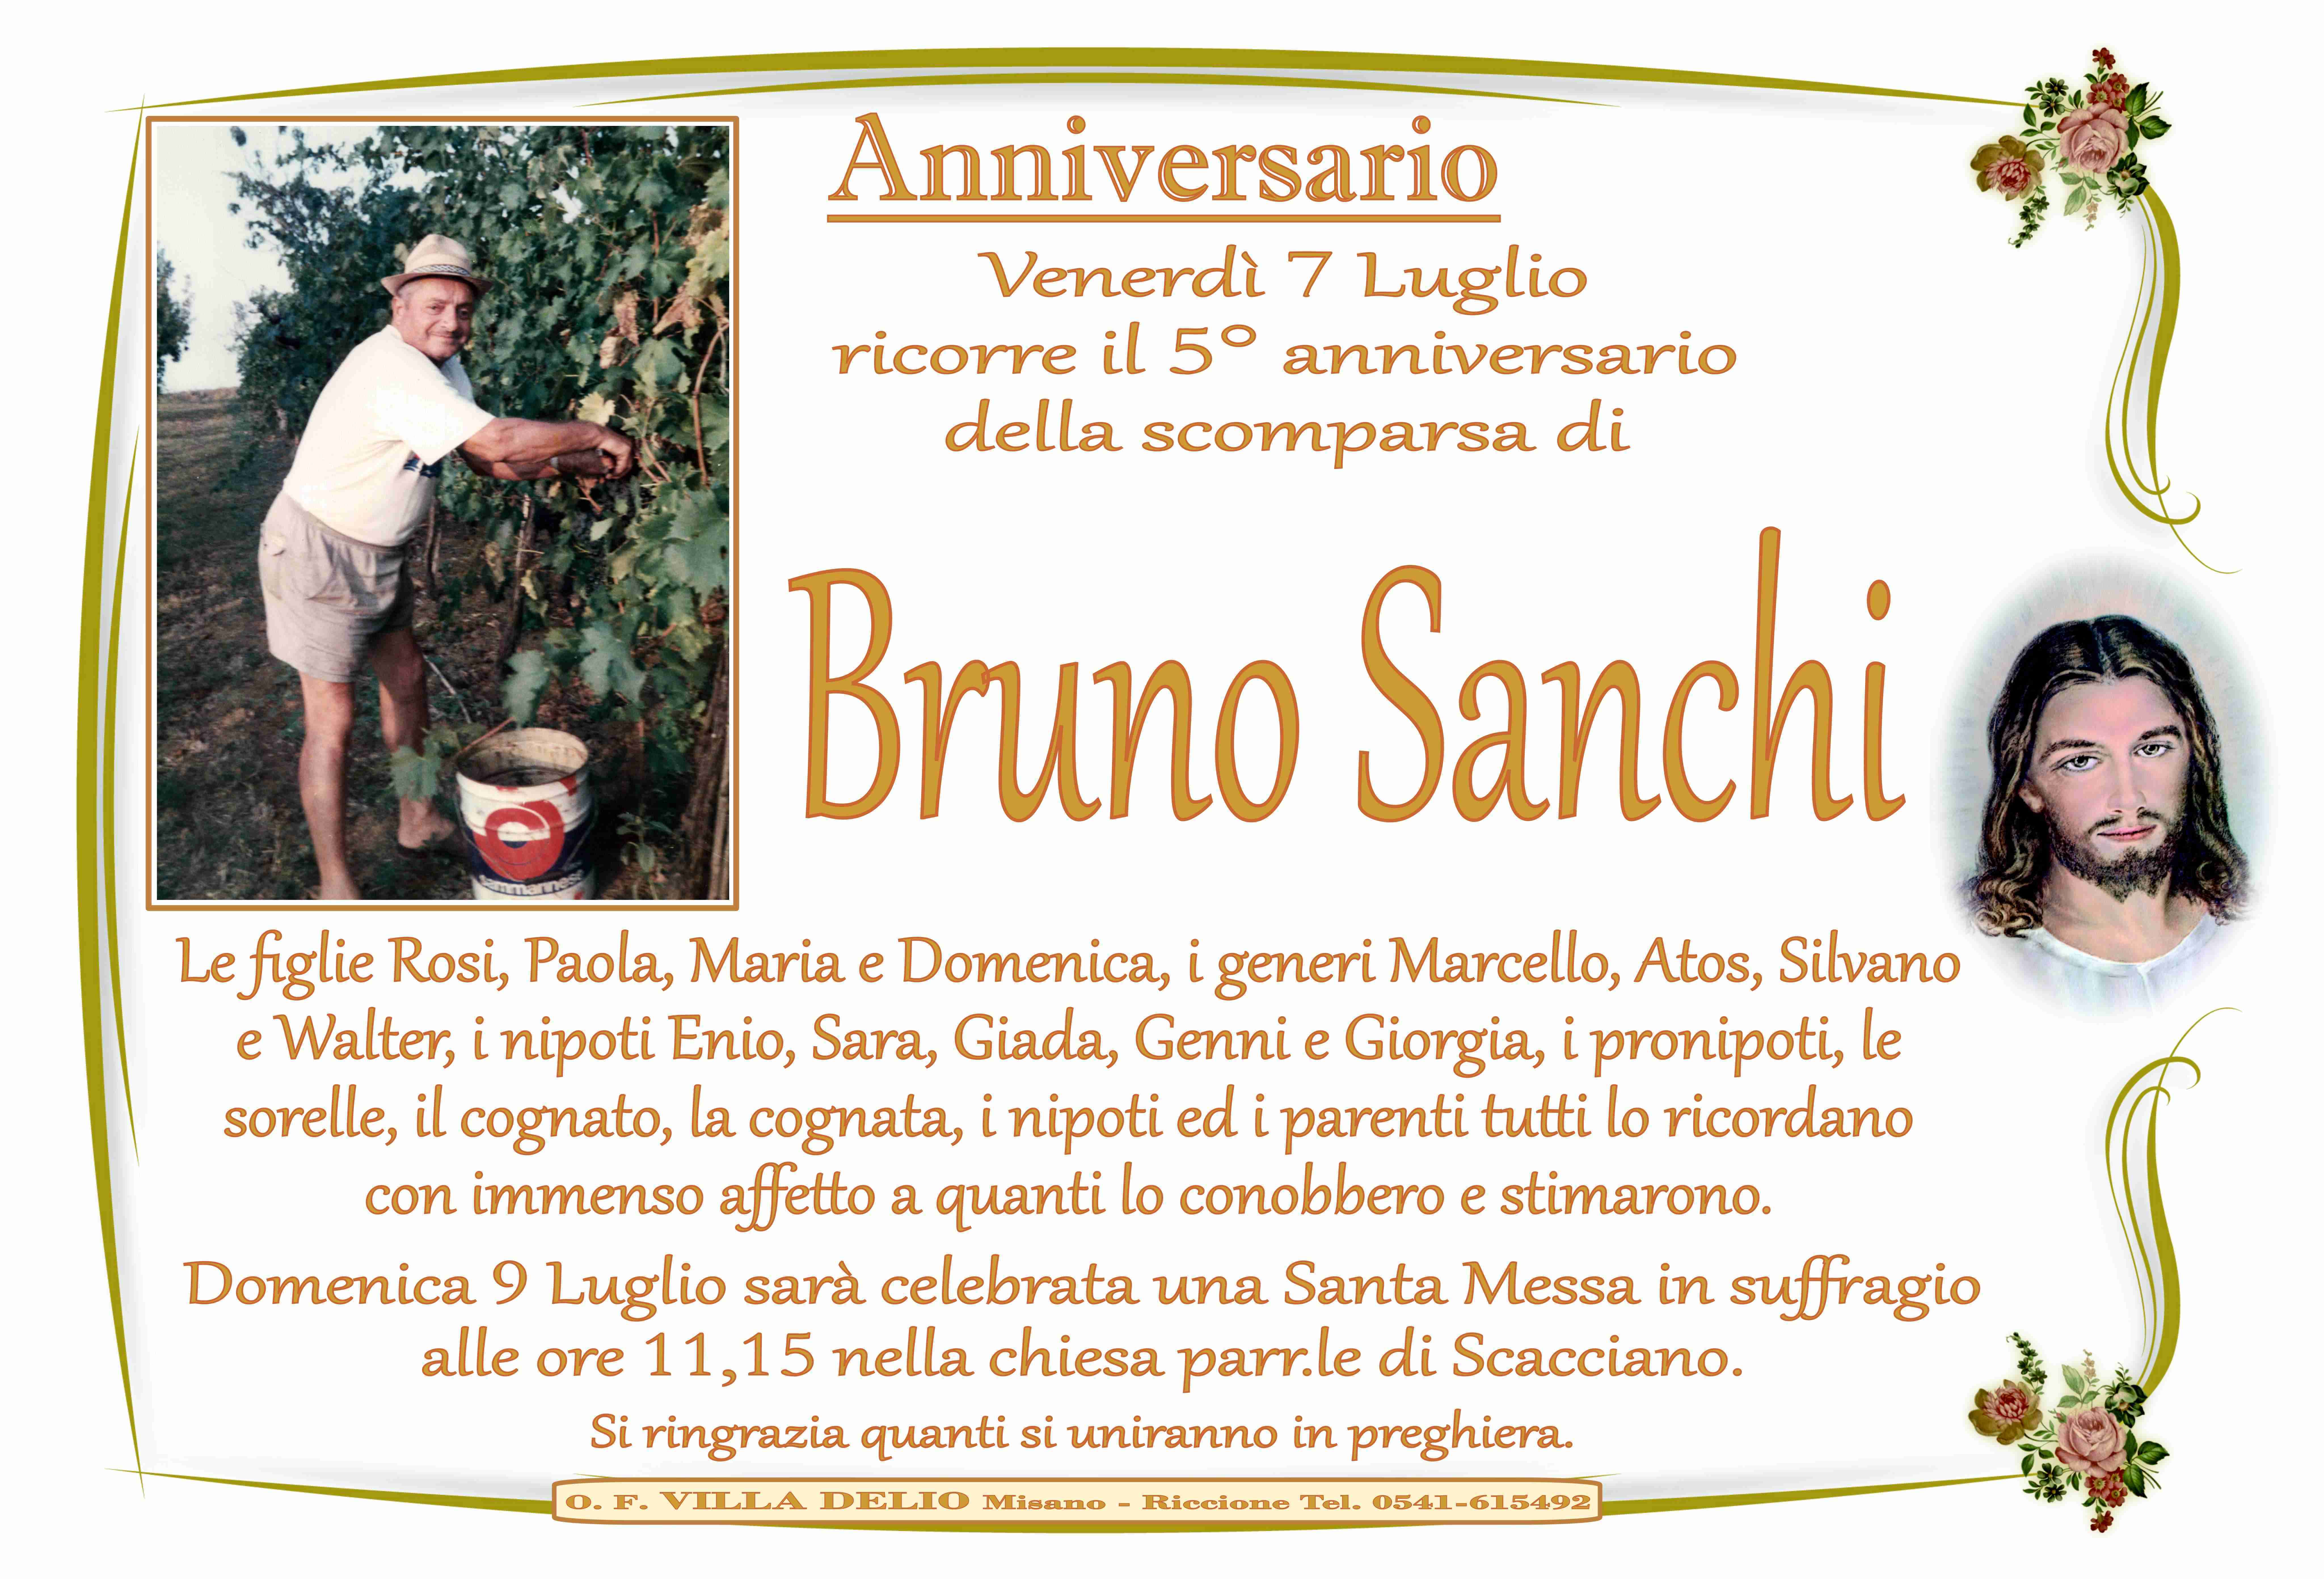 Bruno Sanchi